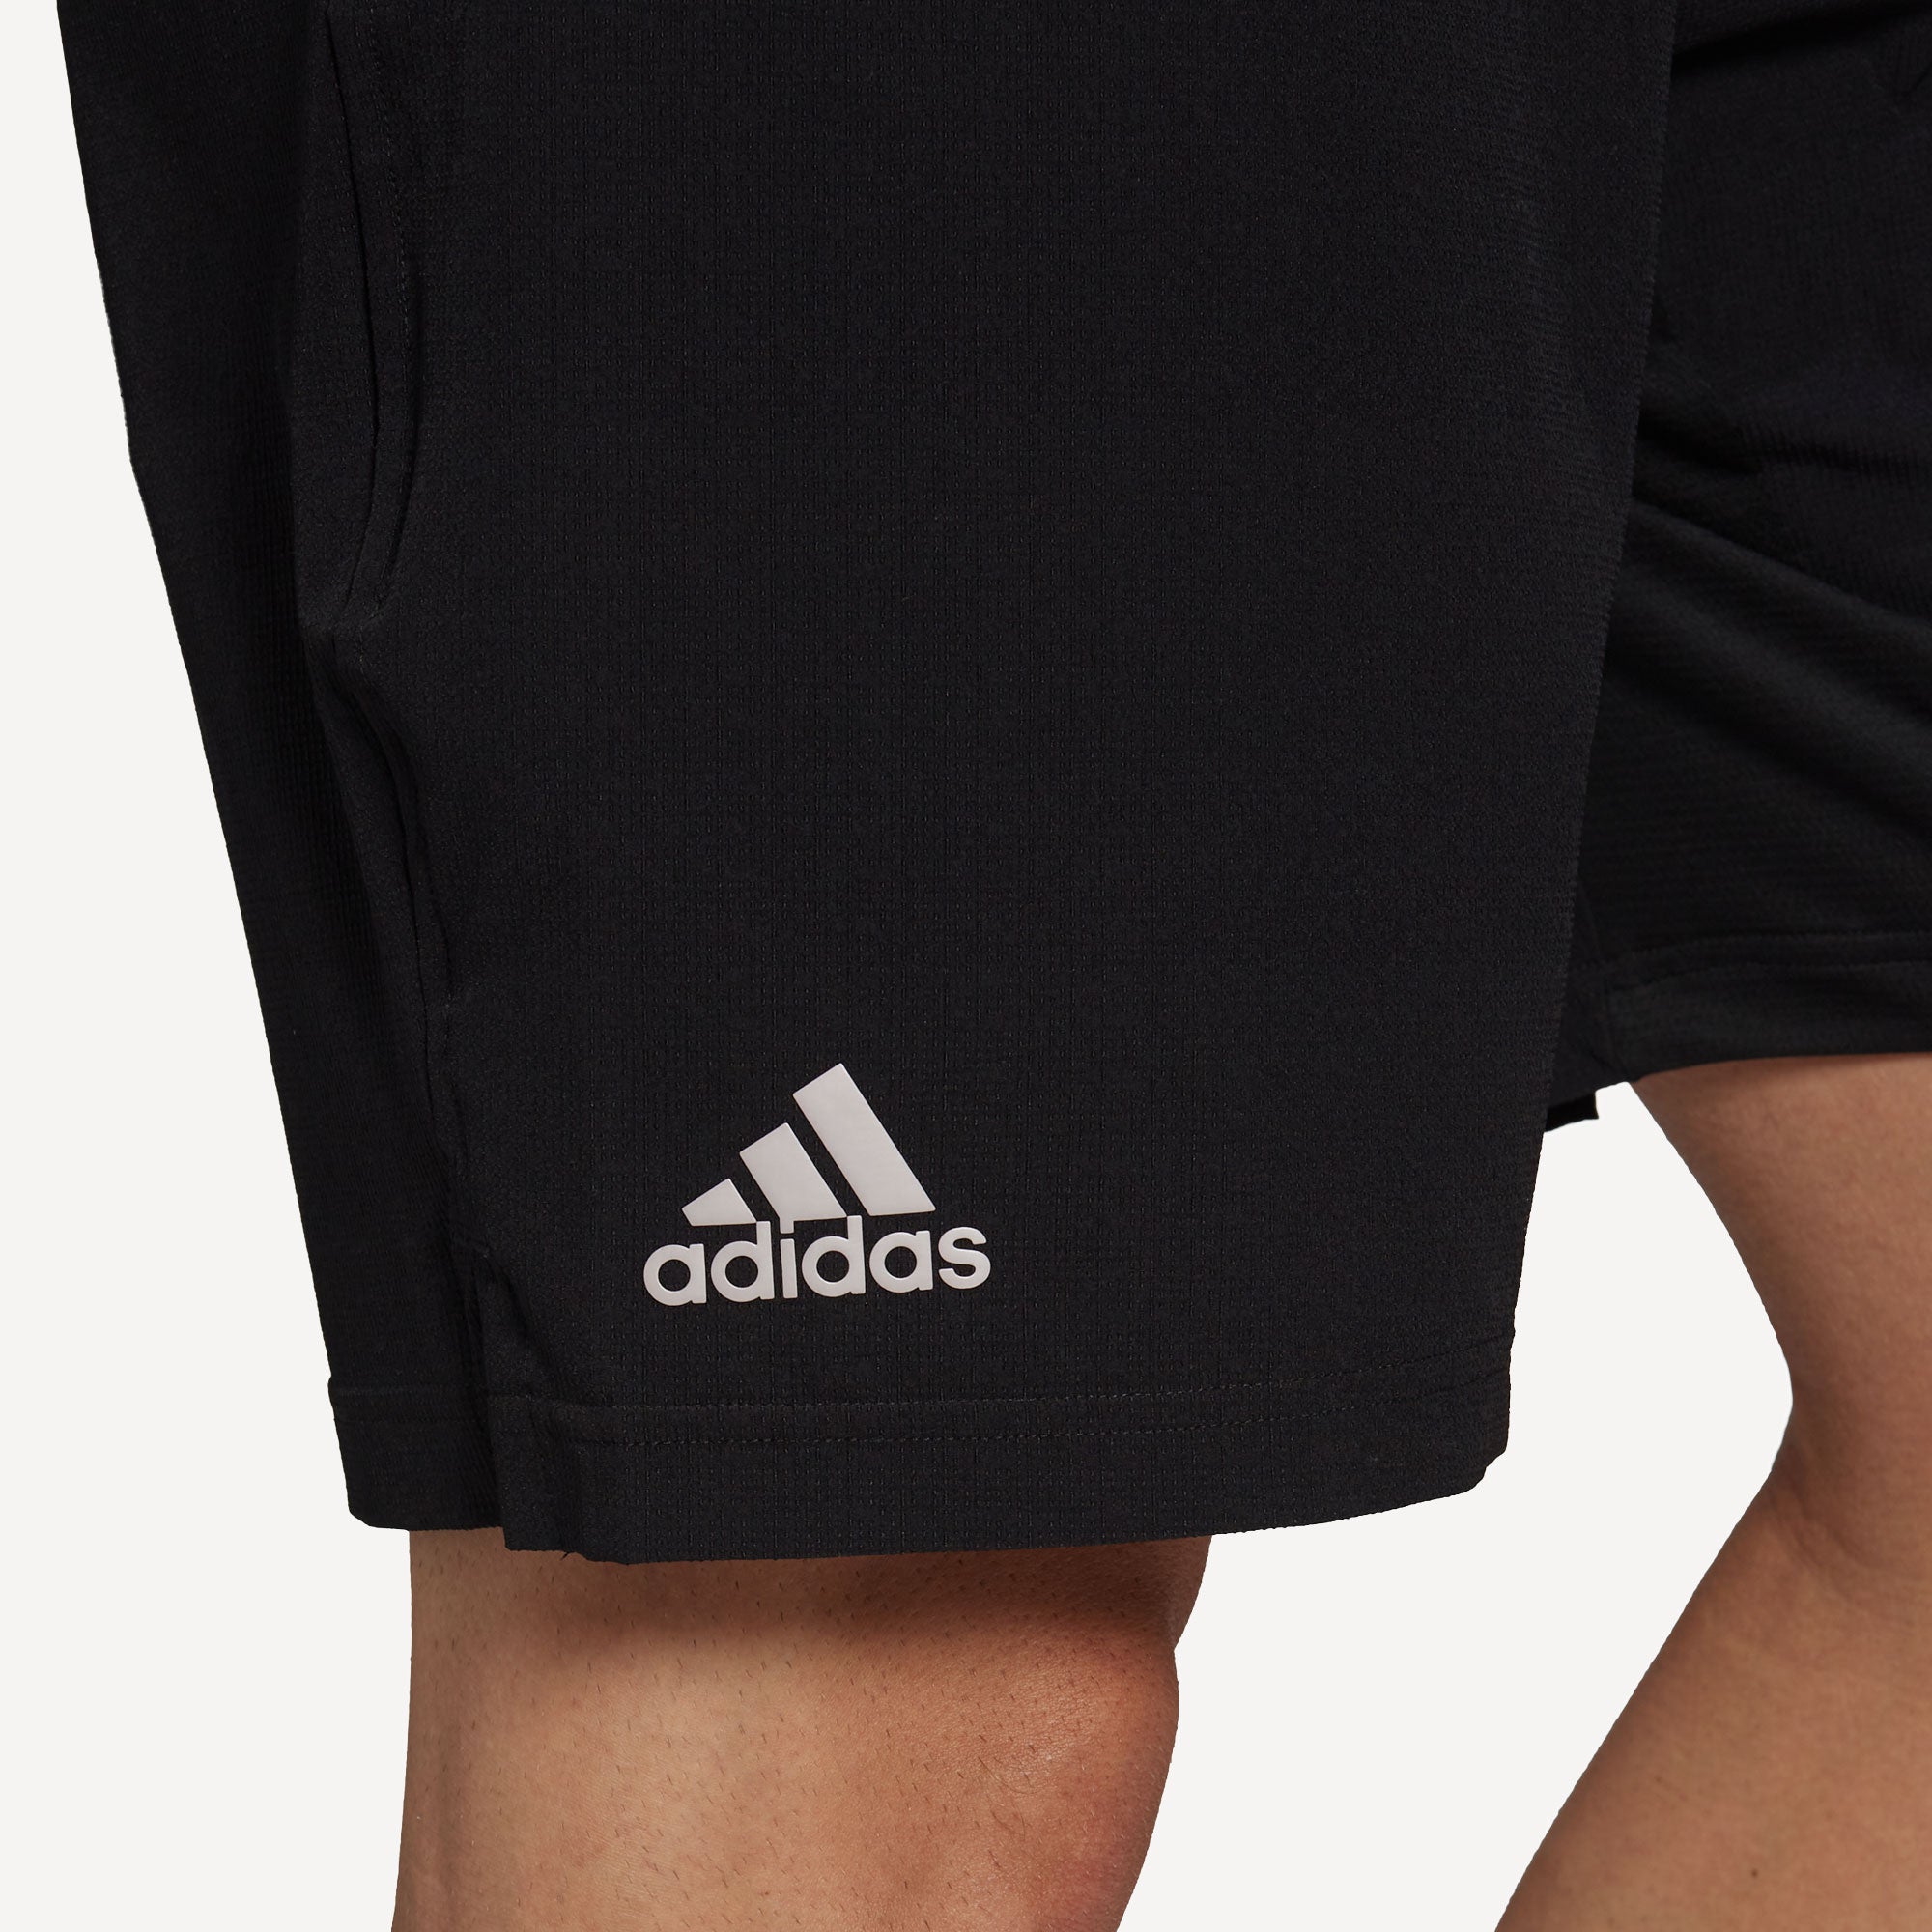 adidas Ergo Men's 9-Inch Tennis Shorts Black (4)